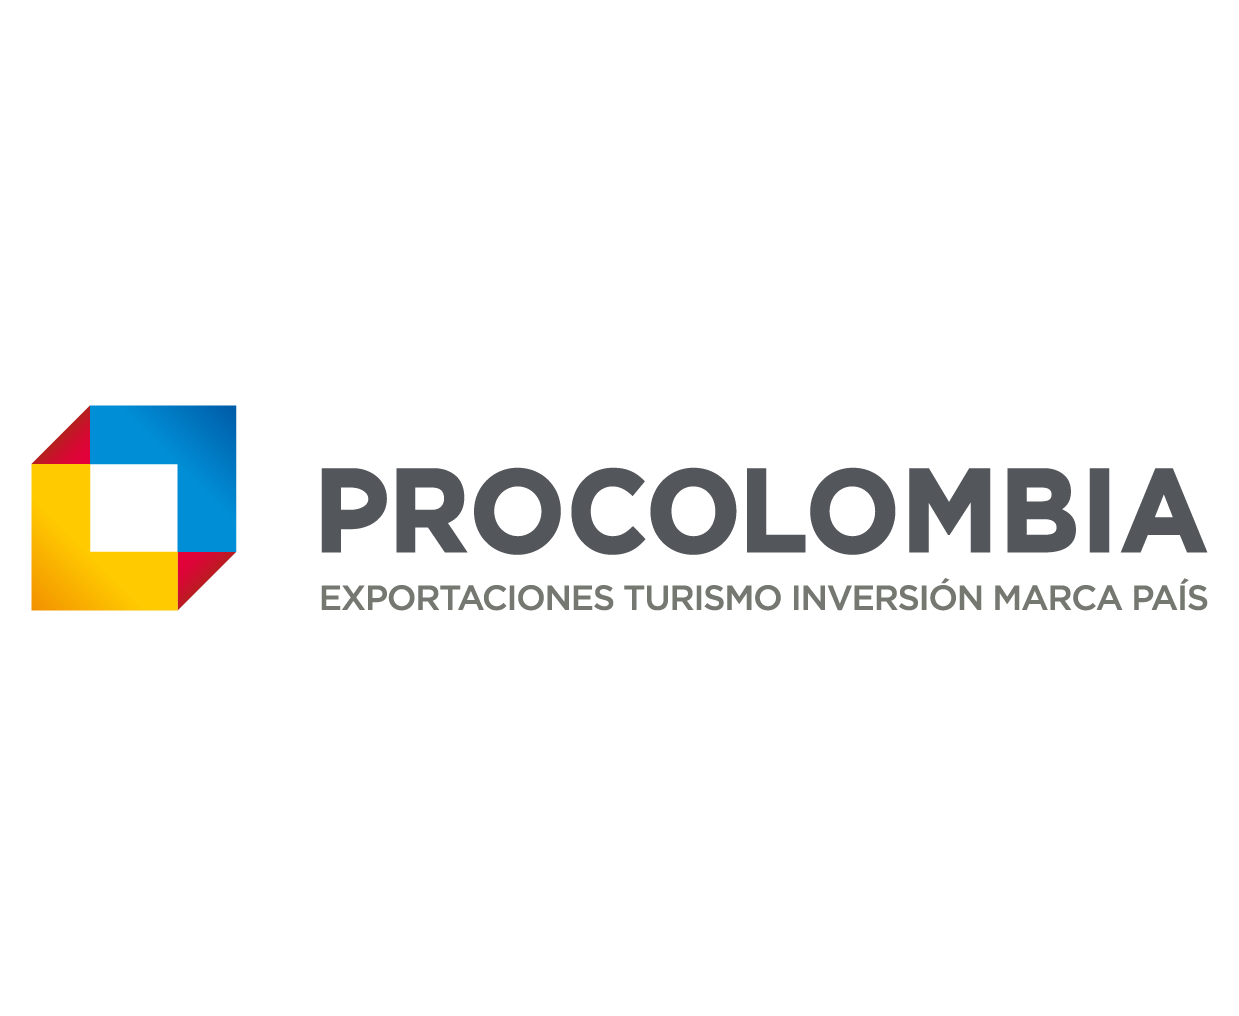 13. Procolombia